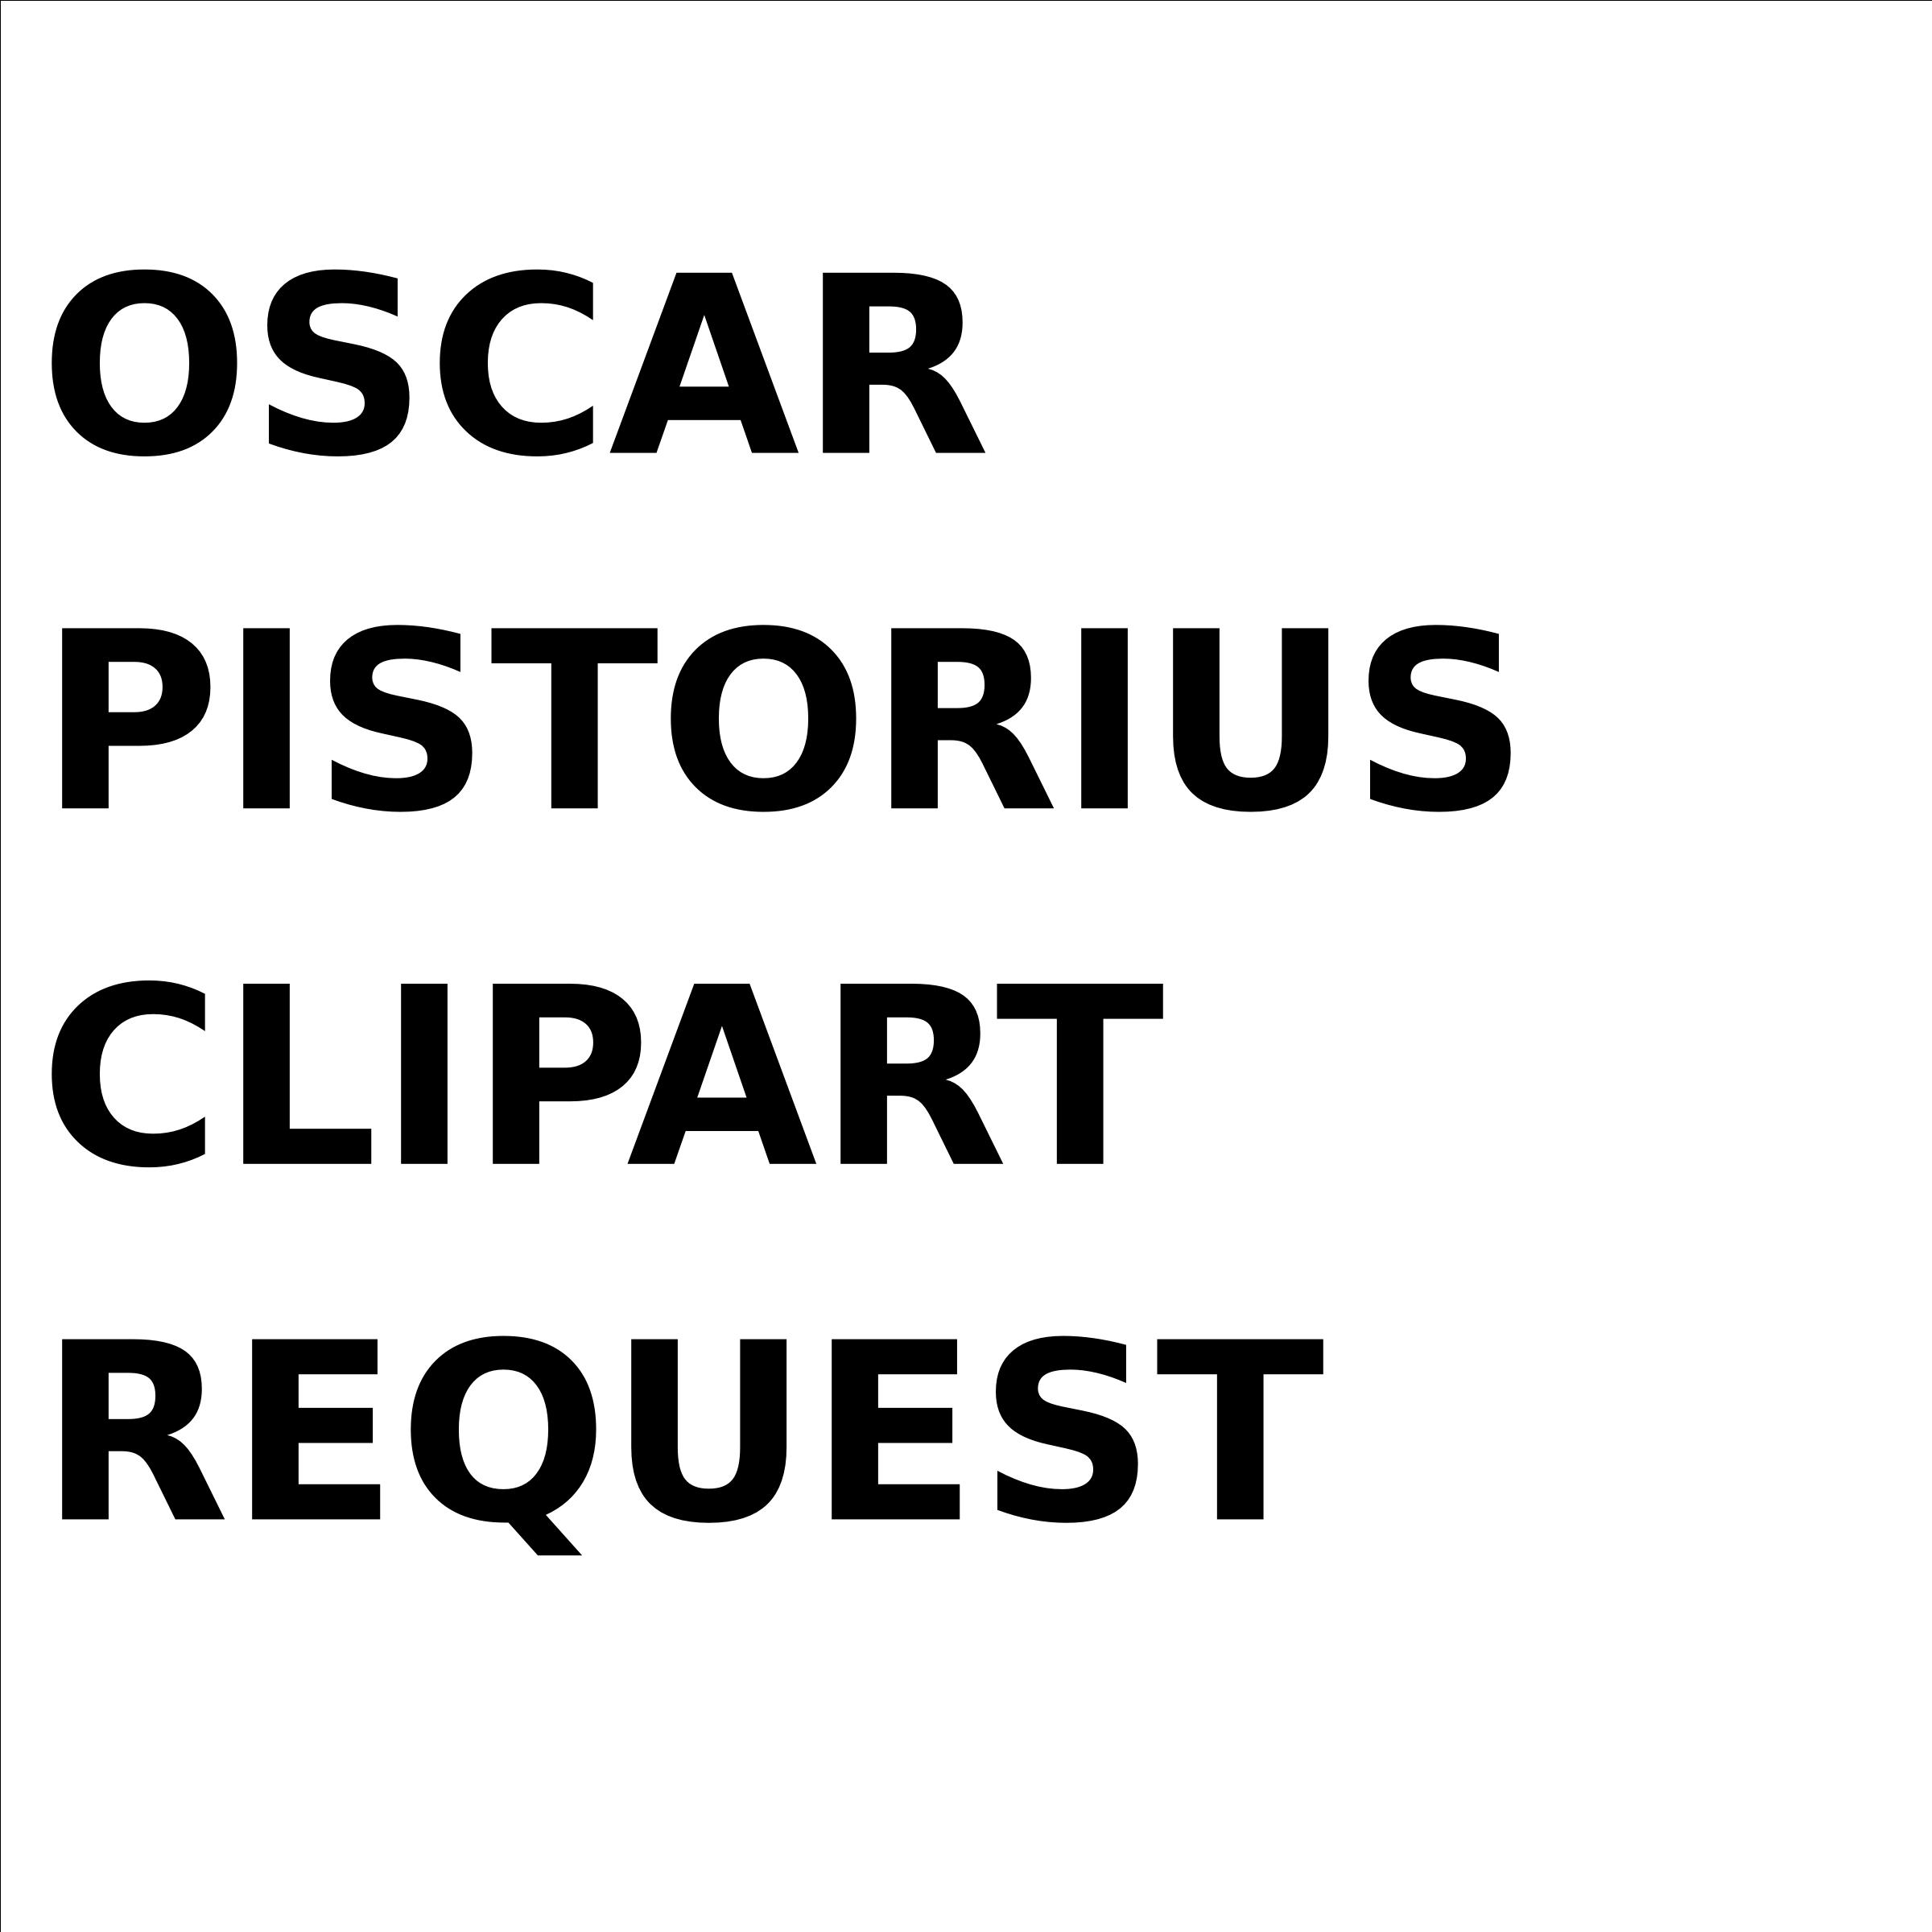 Oscar Pistorius Image Request png